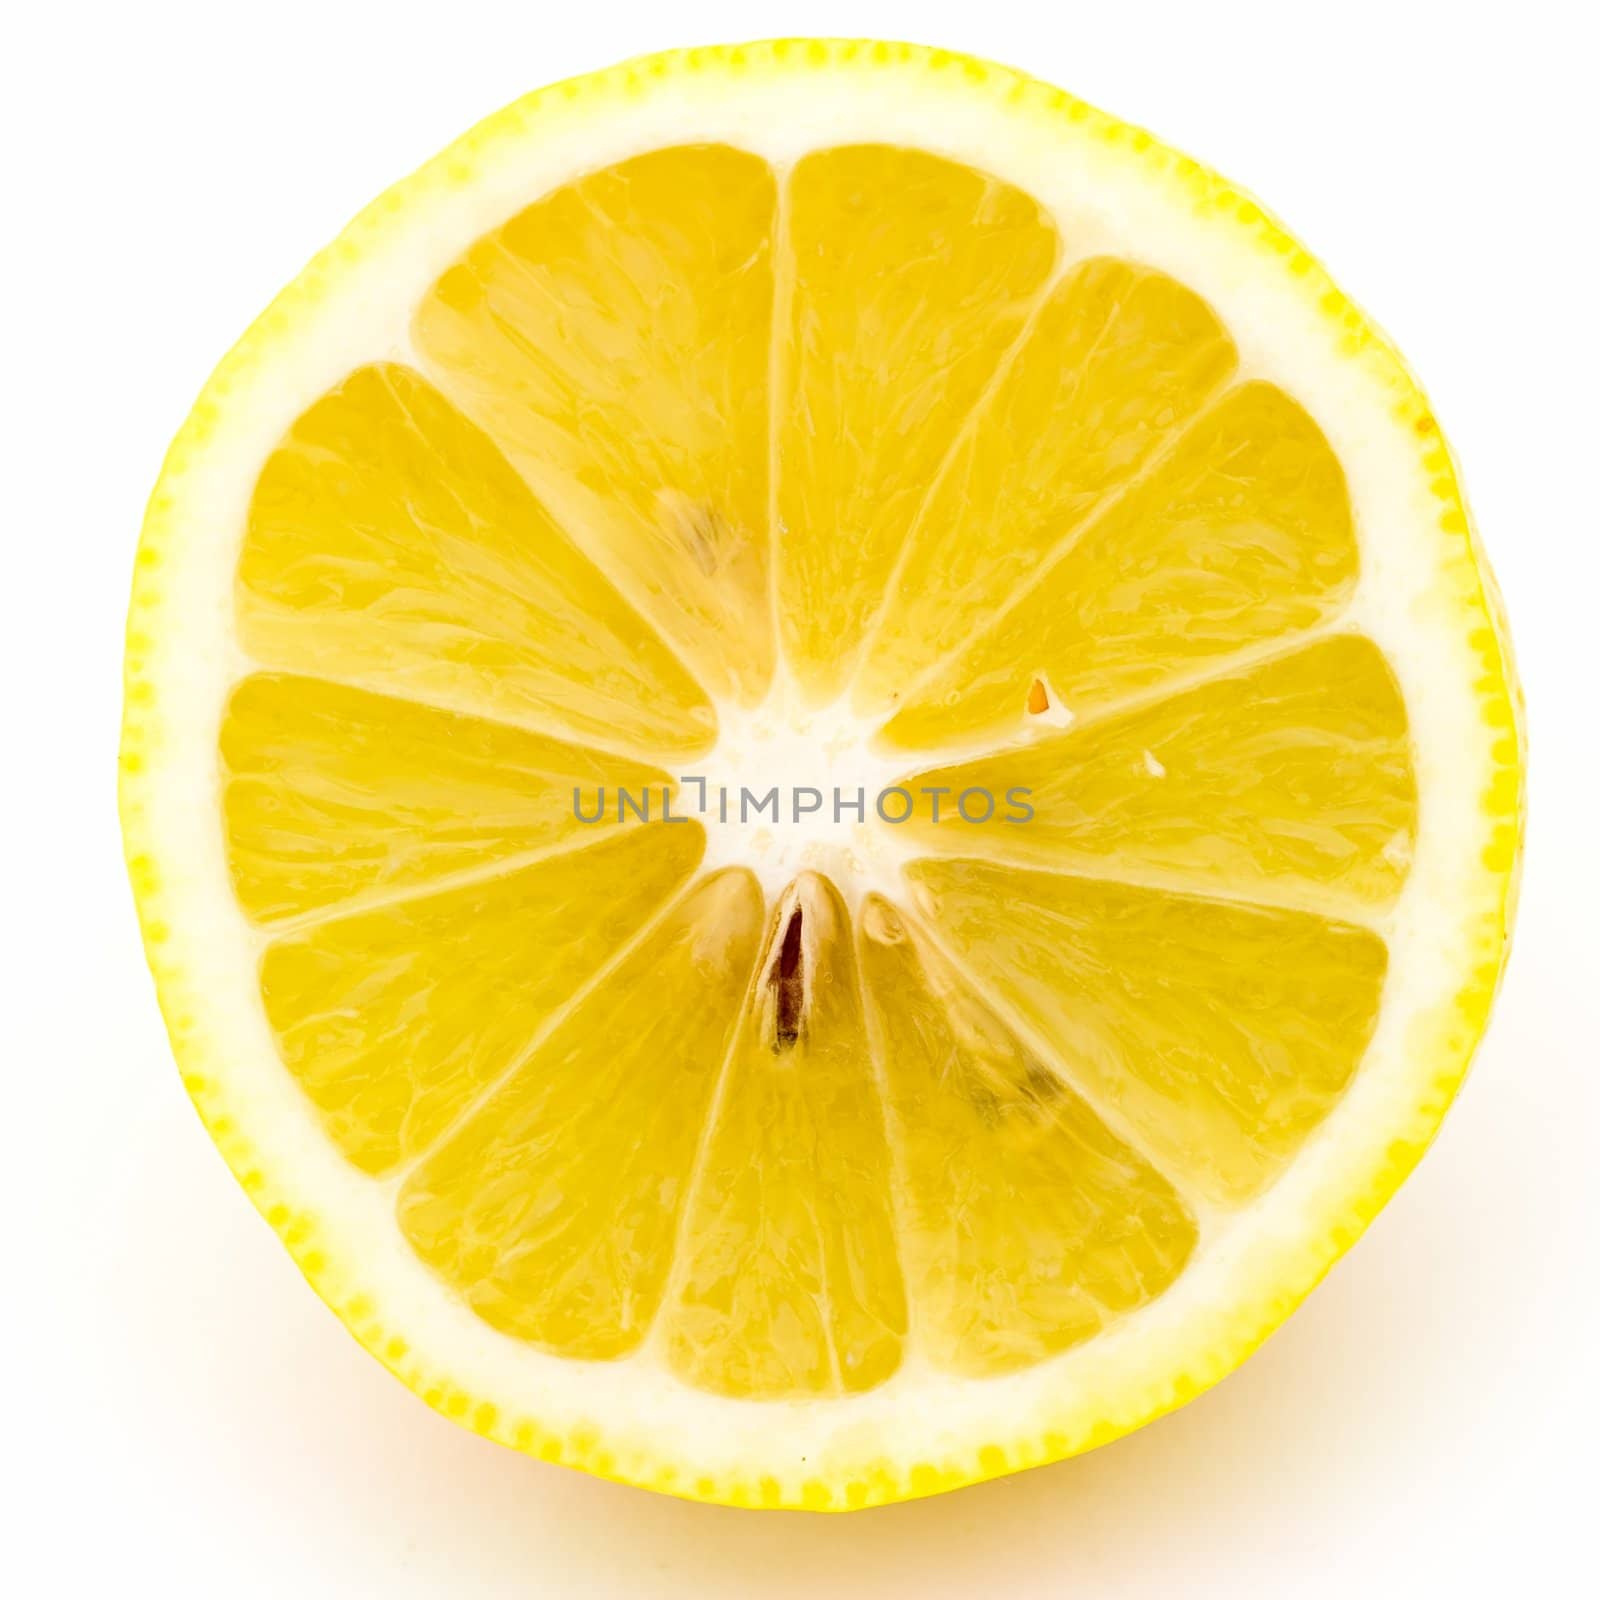 juicy yellow lemon on a white background